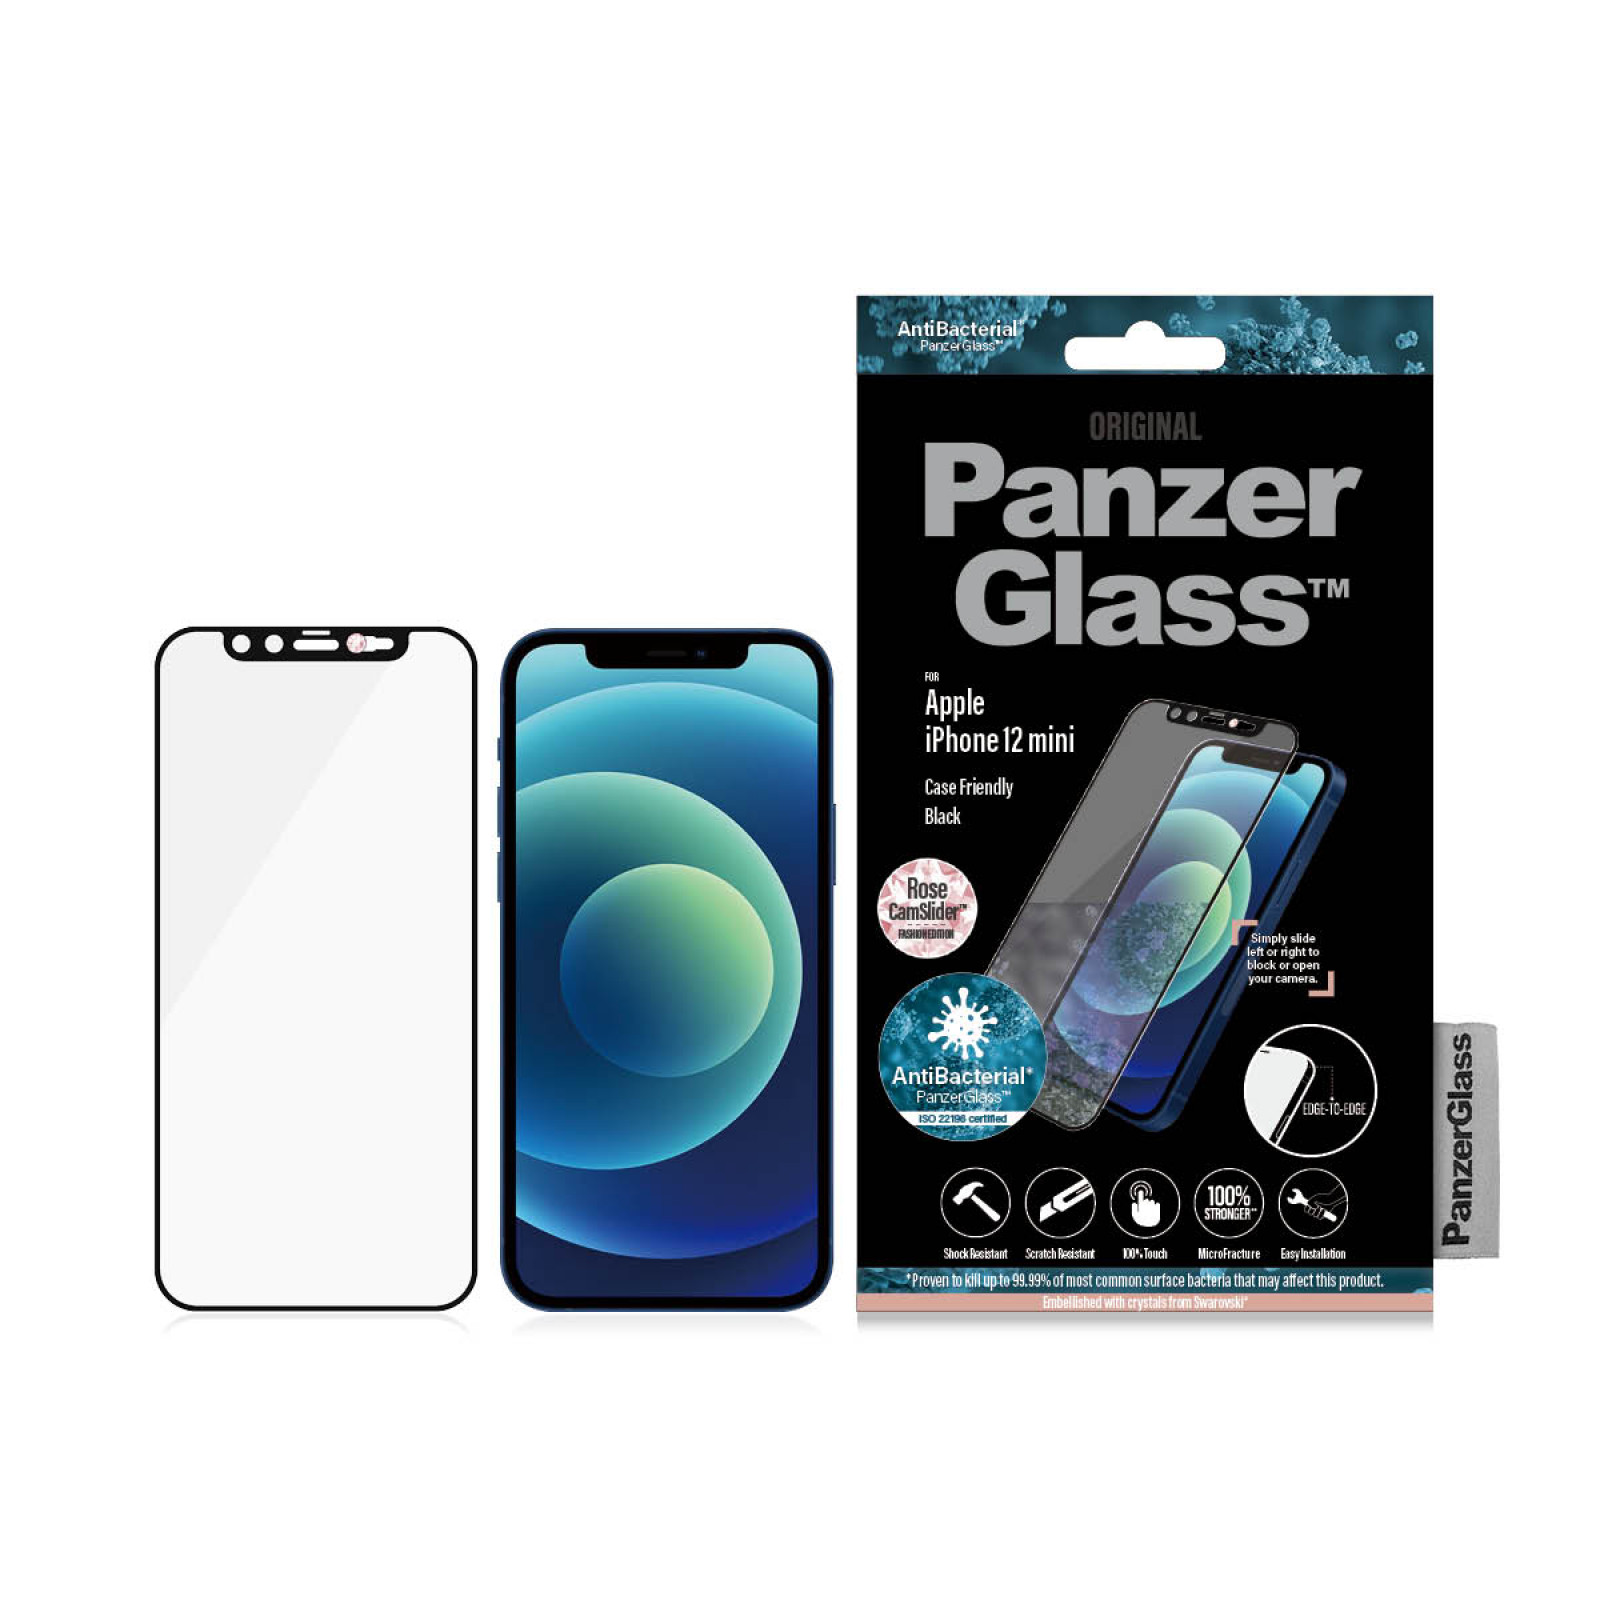 Стъклен протектор PanzerGlass за Iphone 12 mini, CaseFriendly, CamSlaider, Swarovski Rose Edition